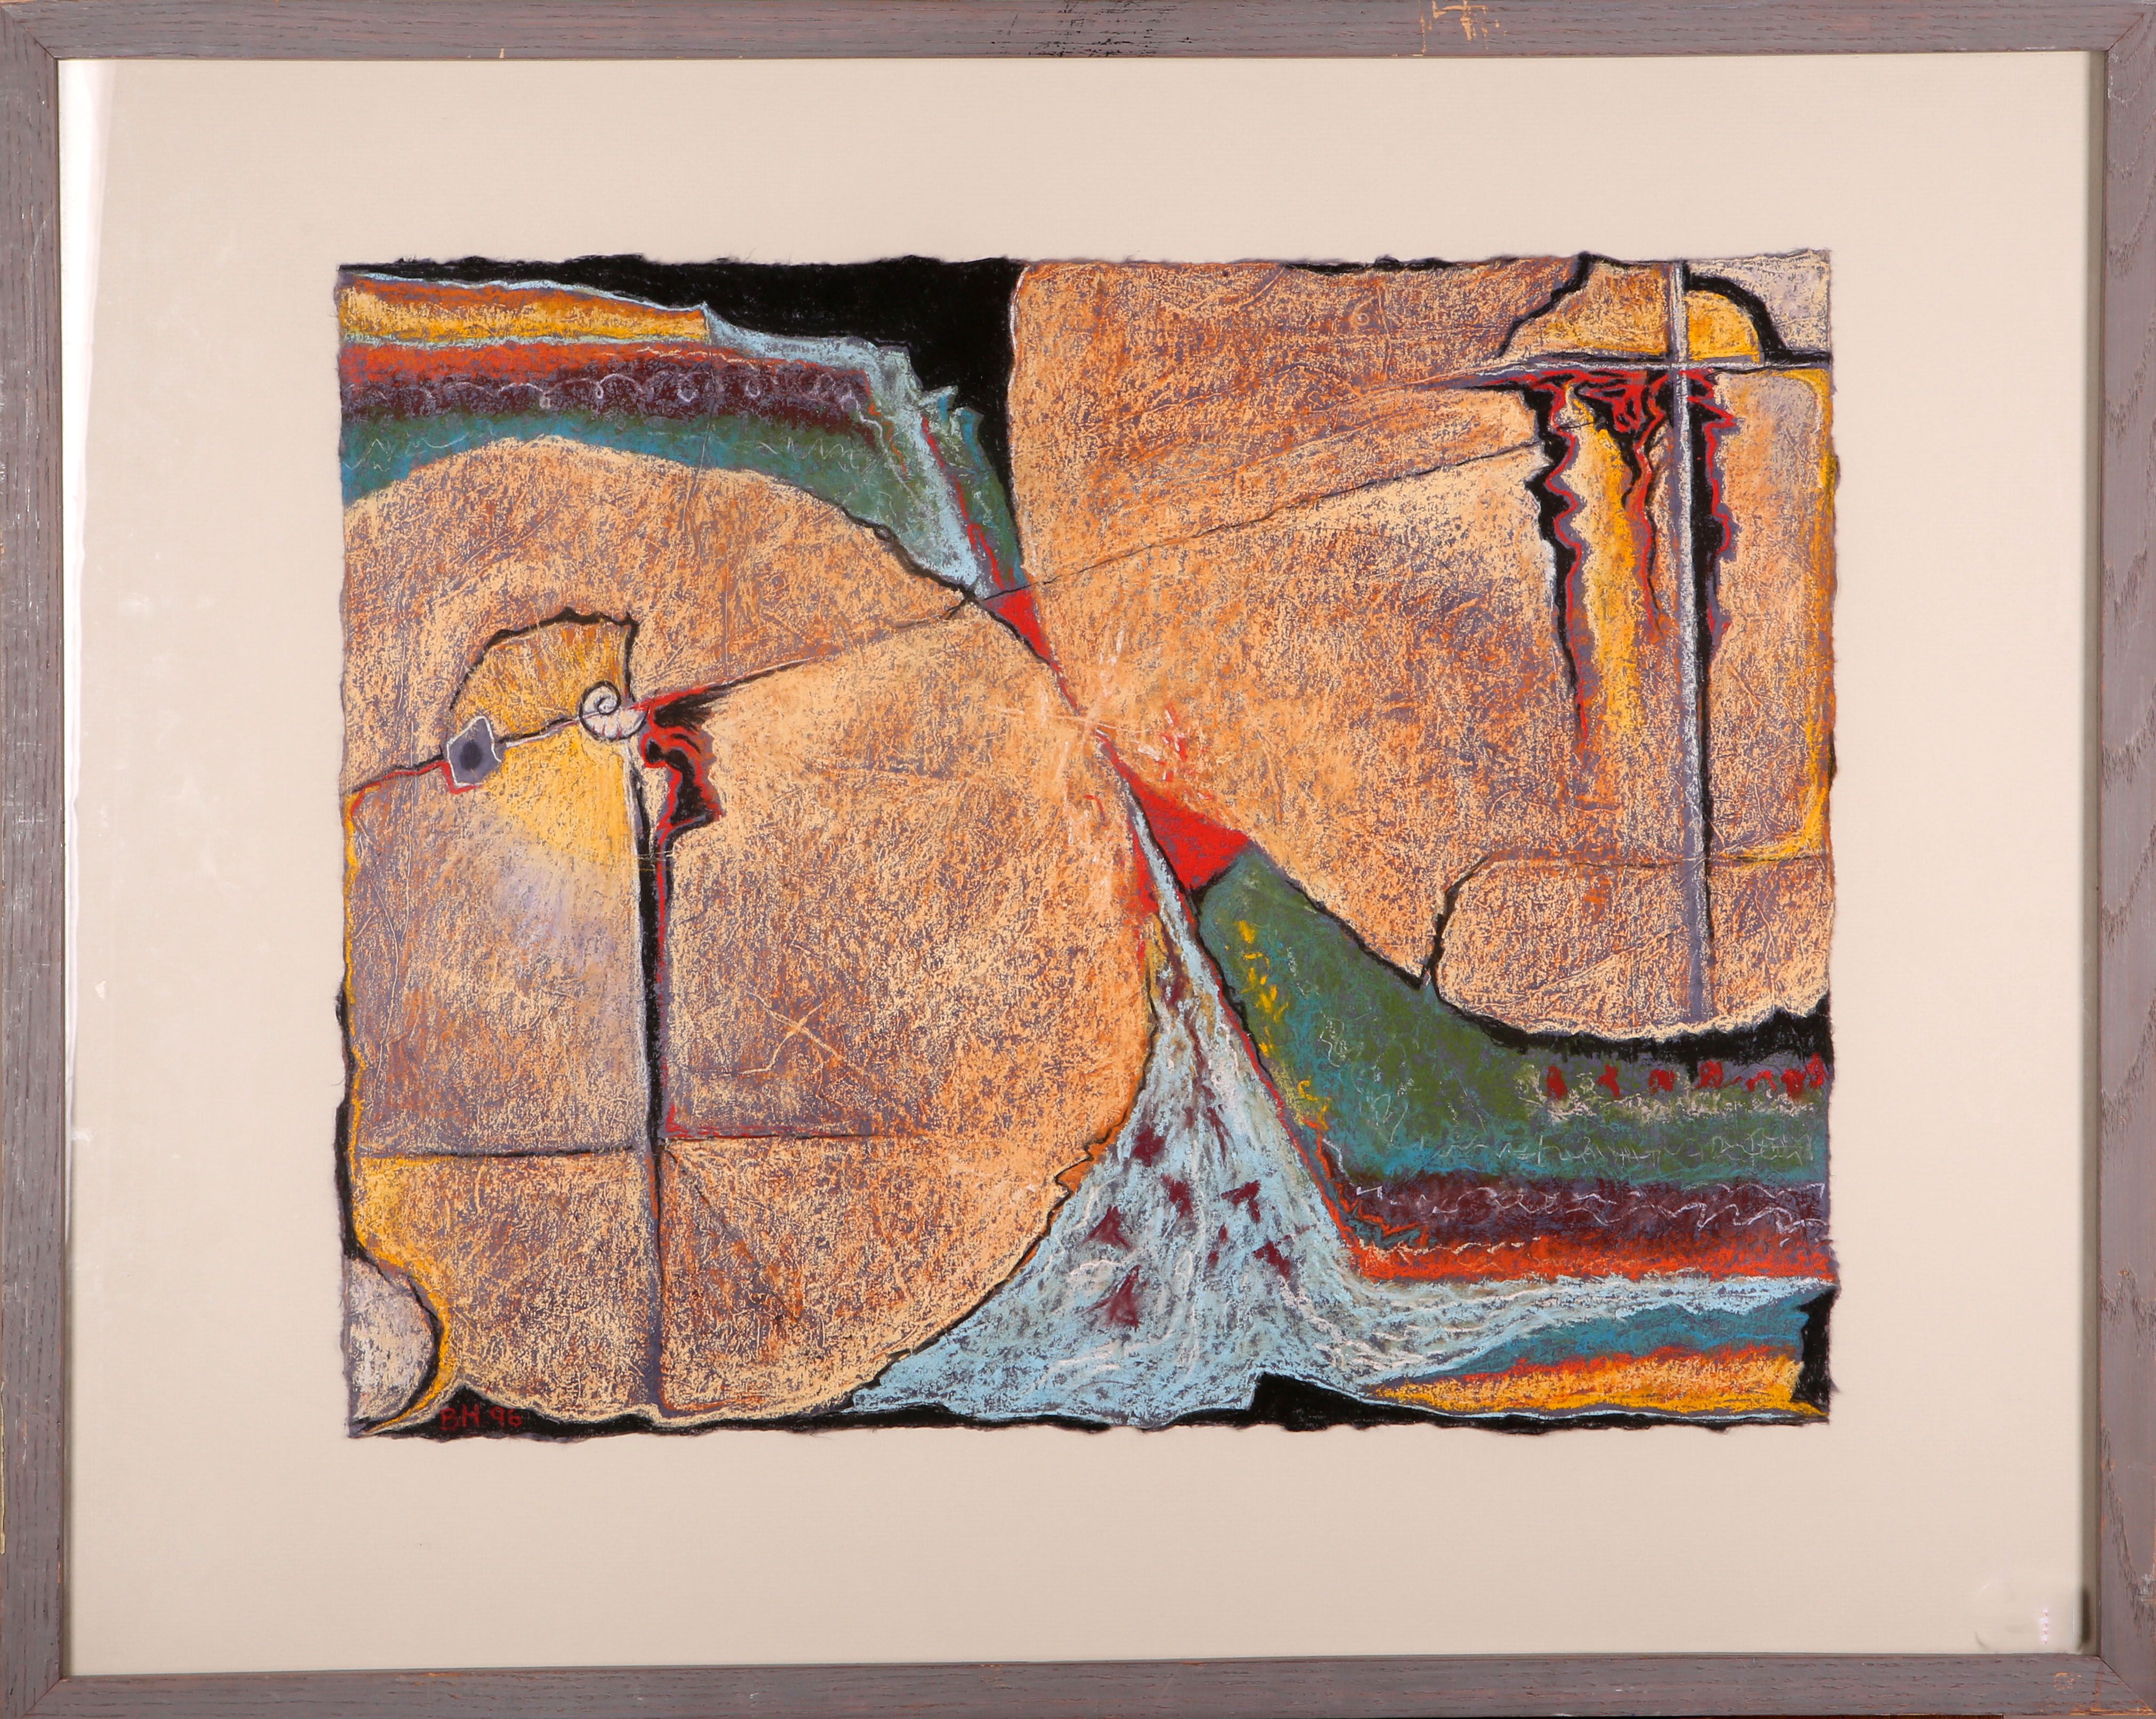 Brian Hanscomb (b. 1944, British), 'Touching Mandalas', 1996, pastel on paper, 18 x 22½".